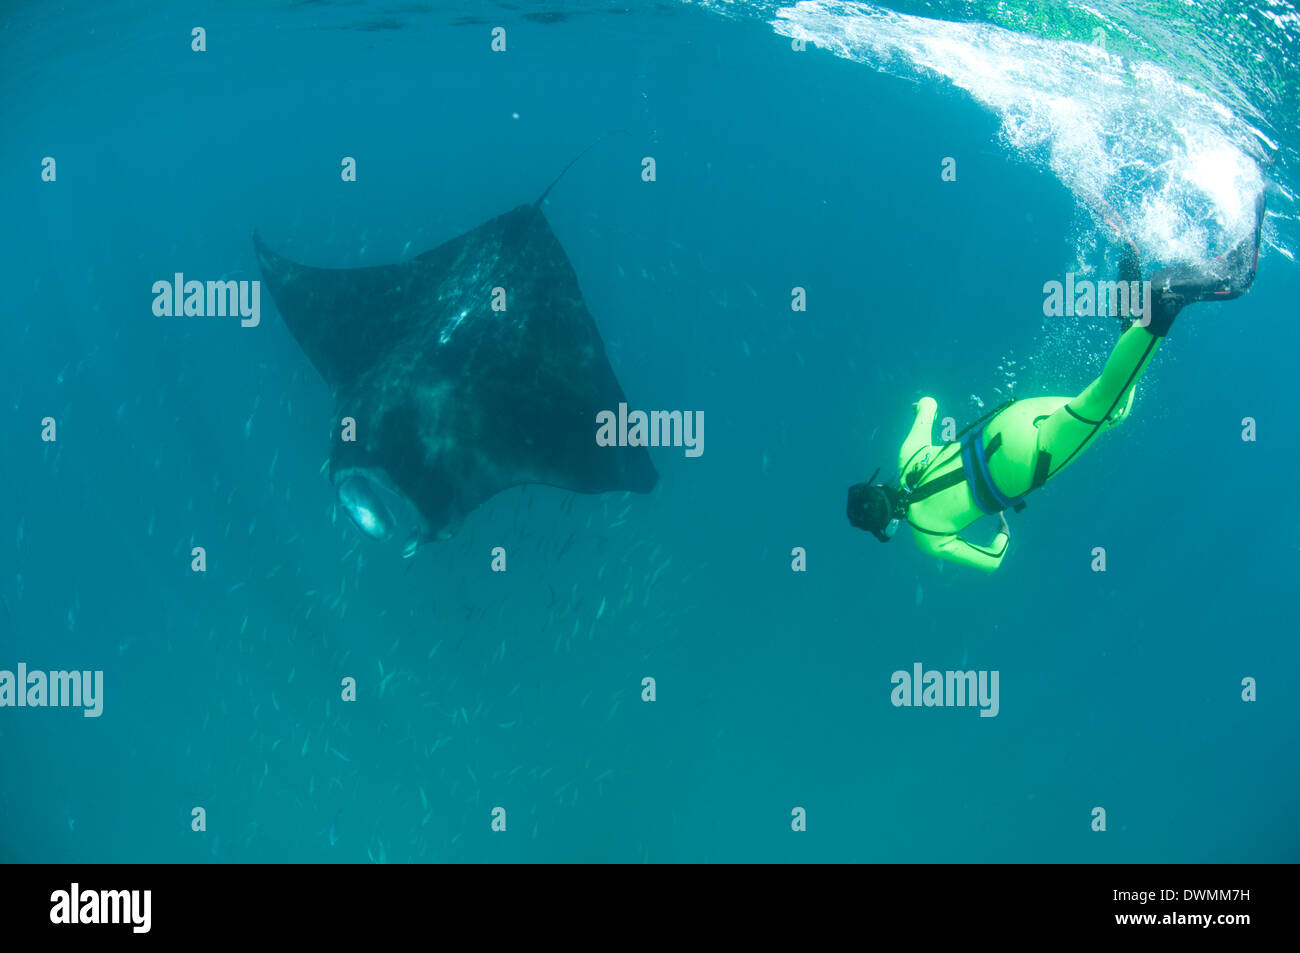 Scientist free diving to photograph a manta ray (Manta birostris), Yum Balam Marine Protected Area, Quintana Roo, Mexico Stock Photo